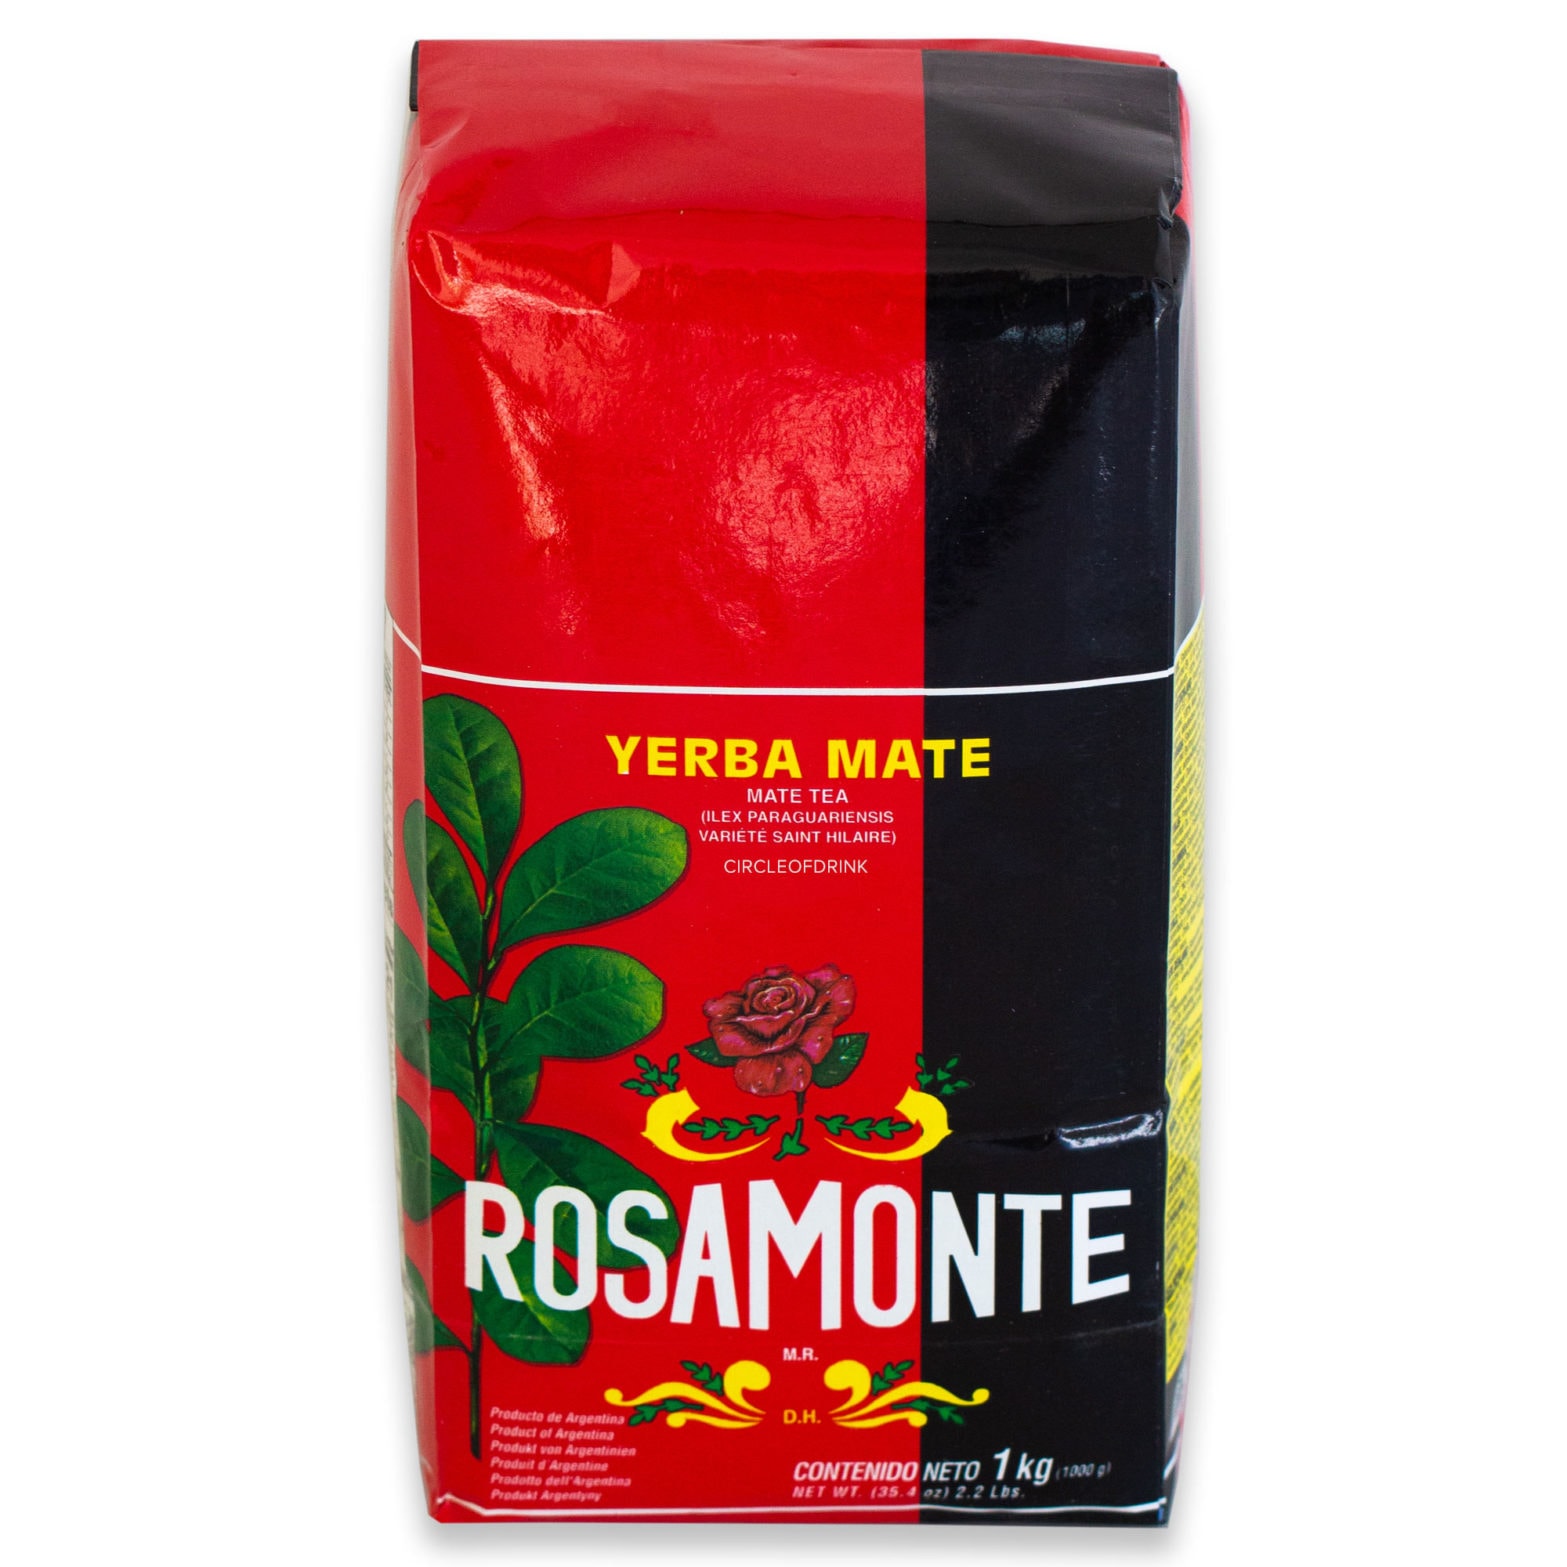 Rosamonte Traditional Yerba Mate - 1kg, 2.2lbs